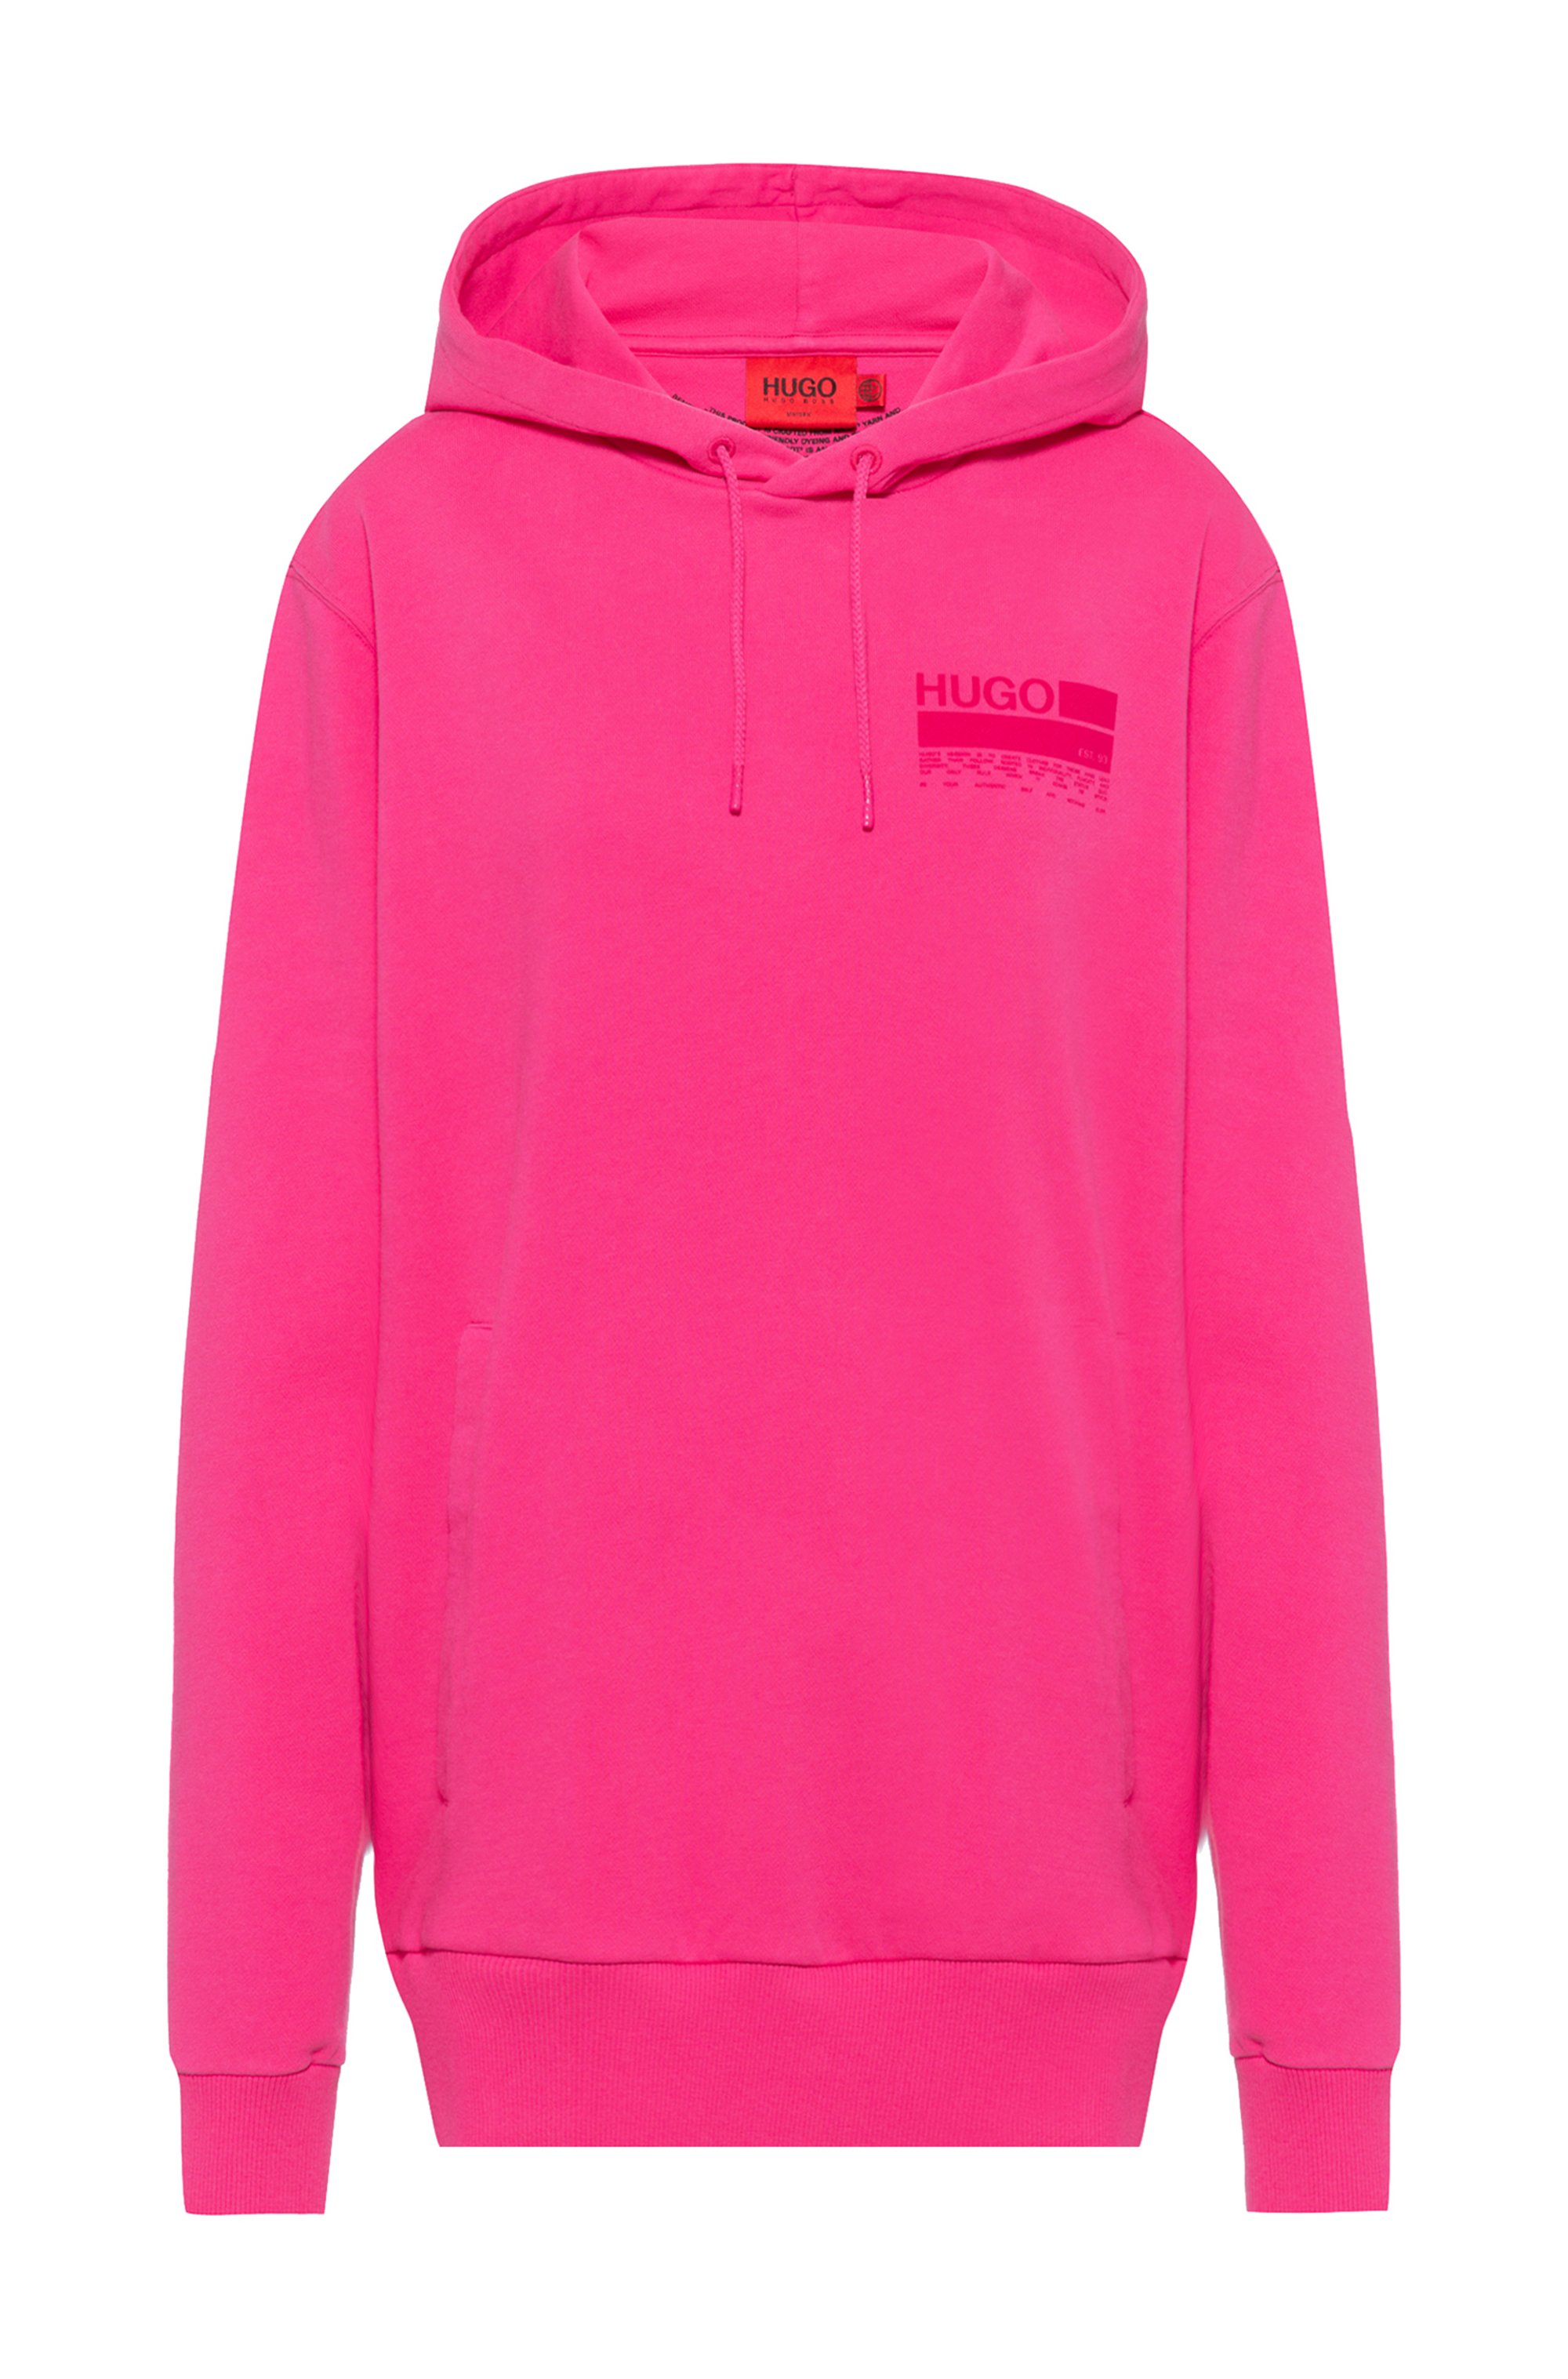 Manifesto-print hooded sweatshirt in Recot²® cotton, Pink